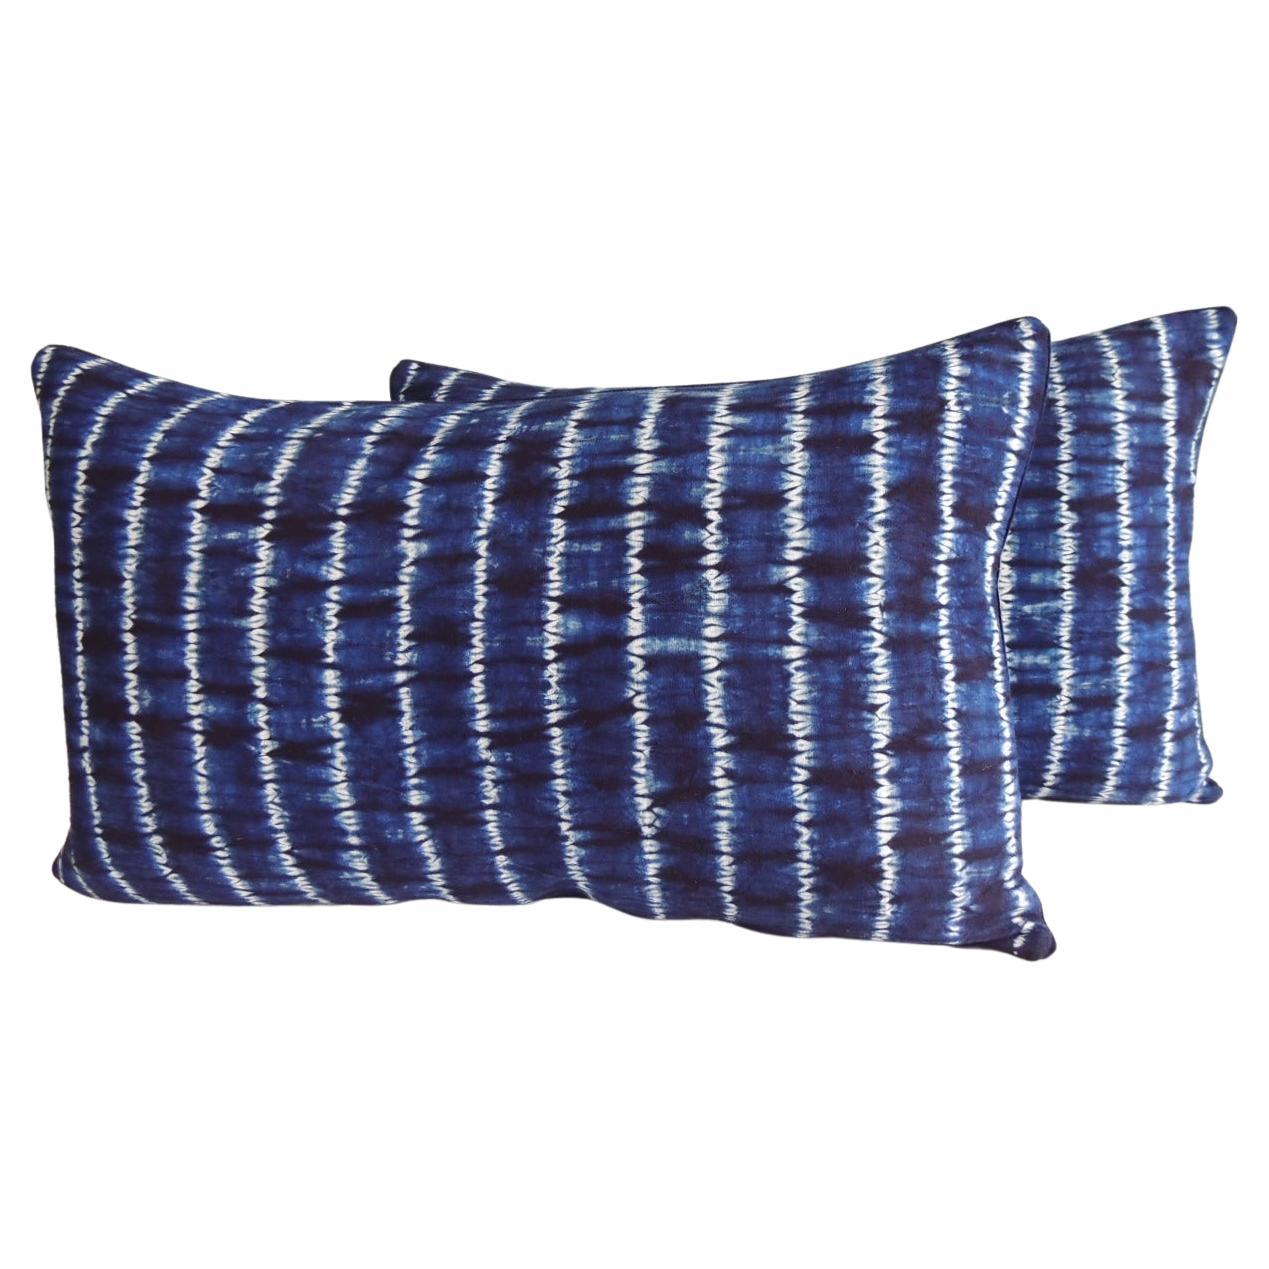 Pair of Indigo and White Stripes Lumbar Decorative Pillows